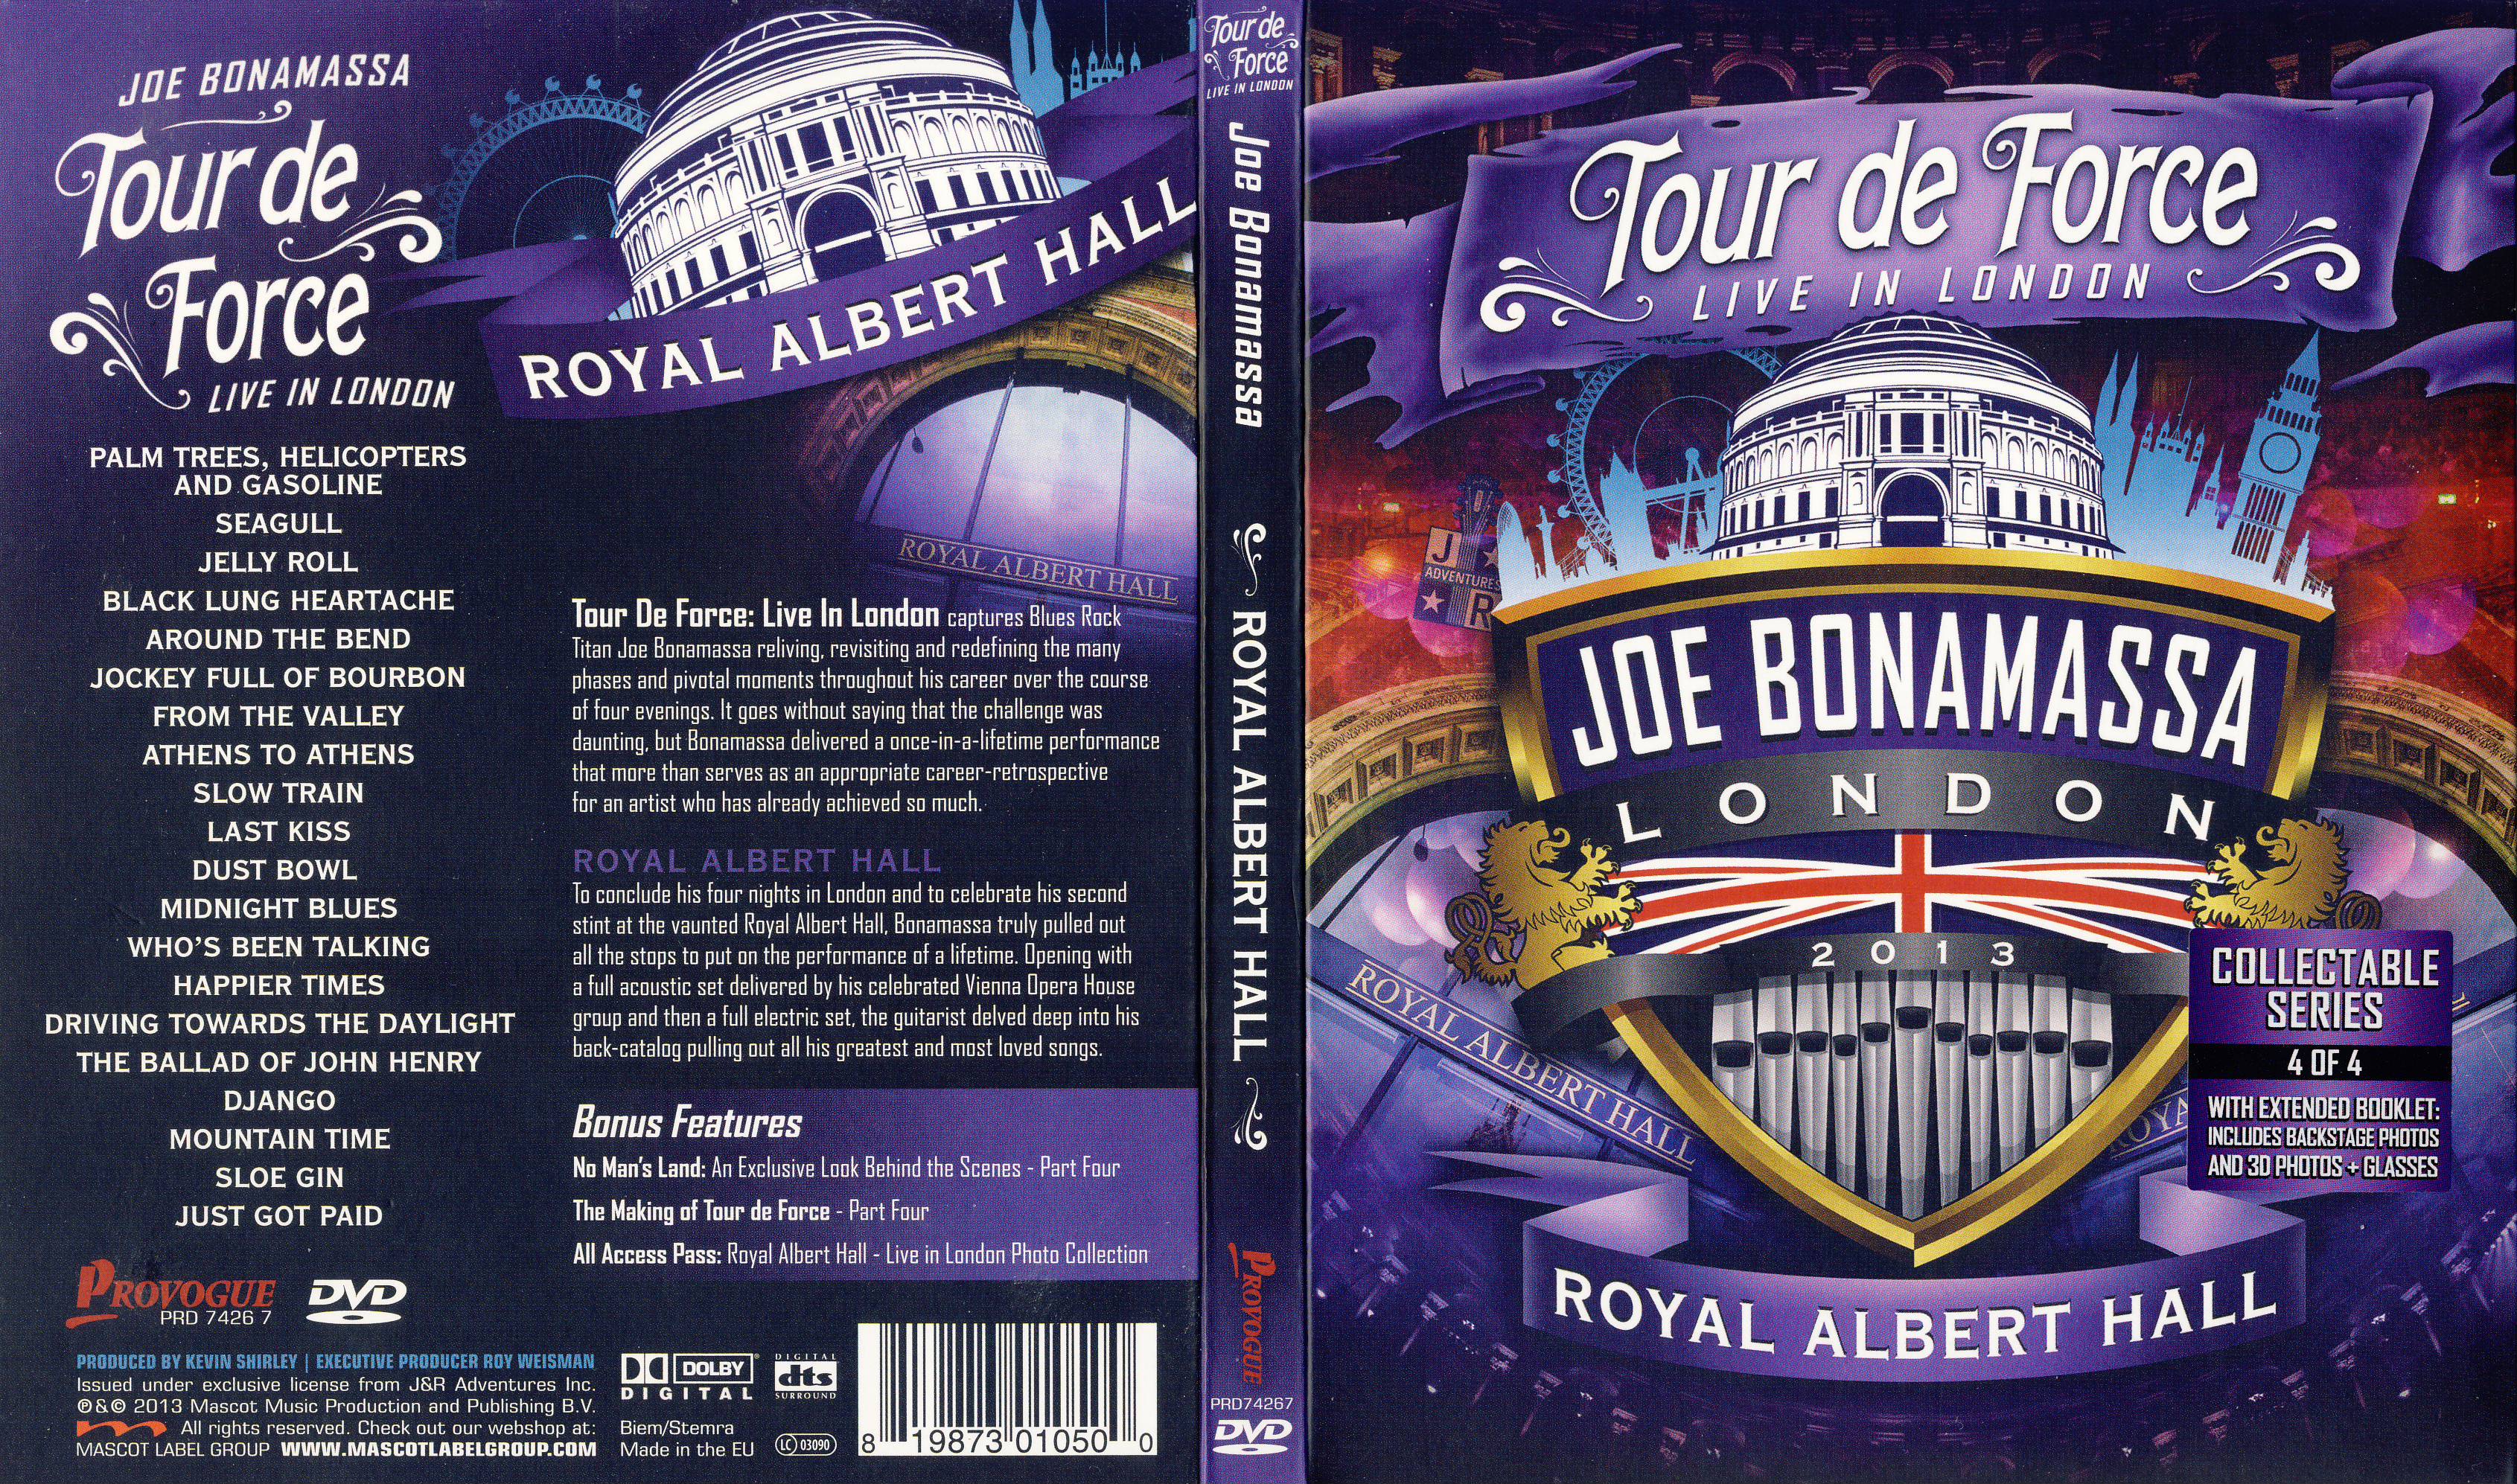 Jaquette DVD Joe Bonamassa Tour de Force london 2013 Royal Albert Hall